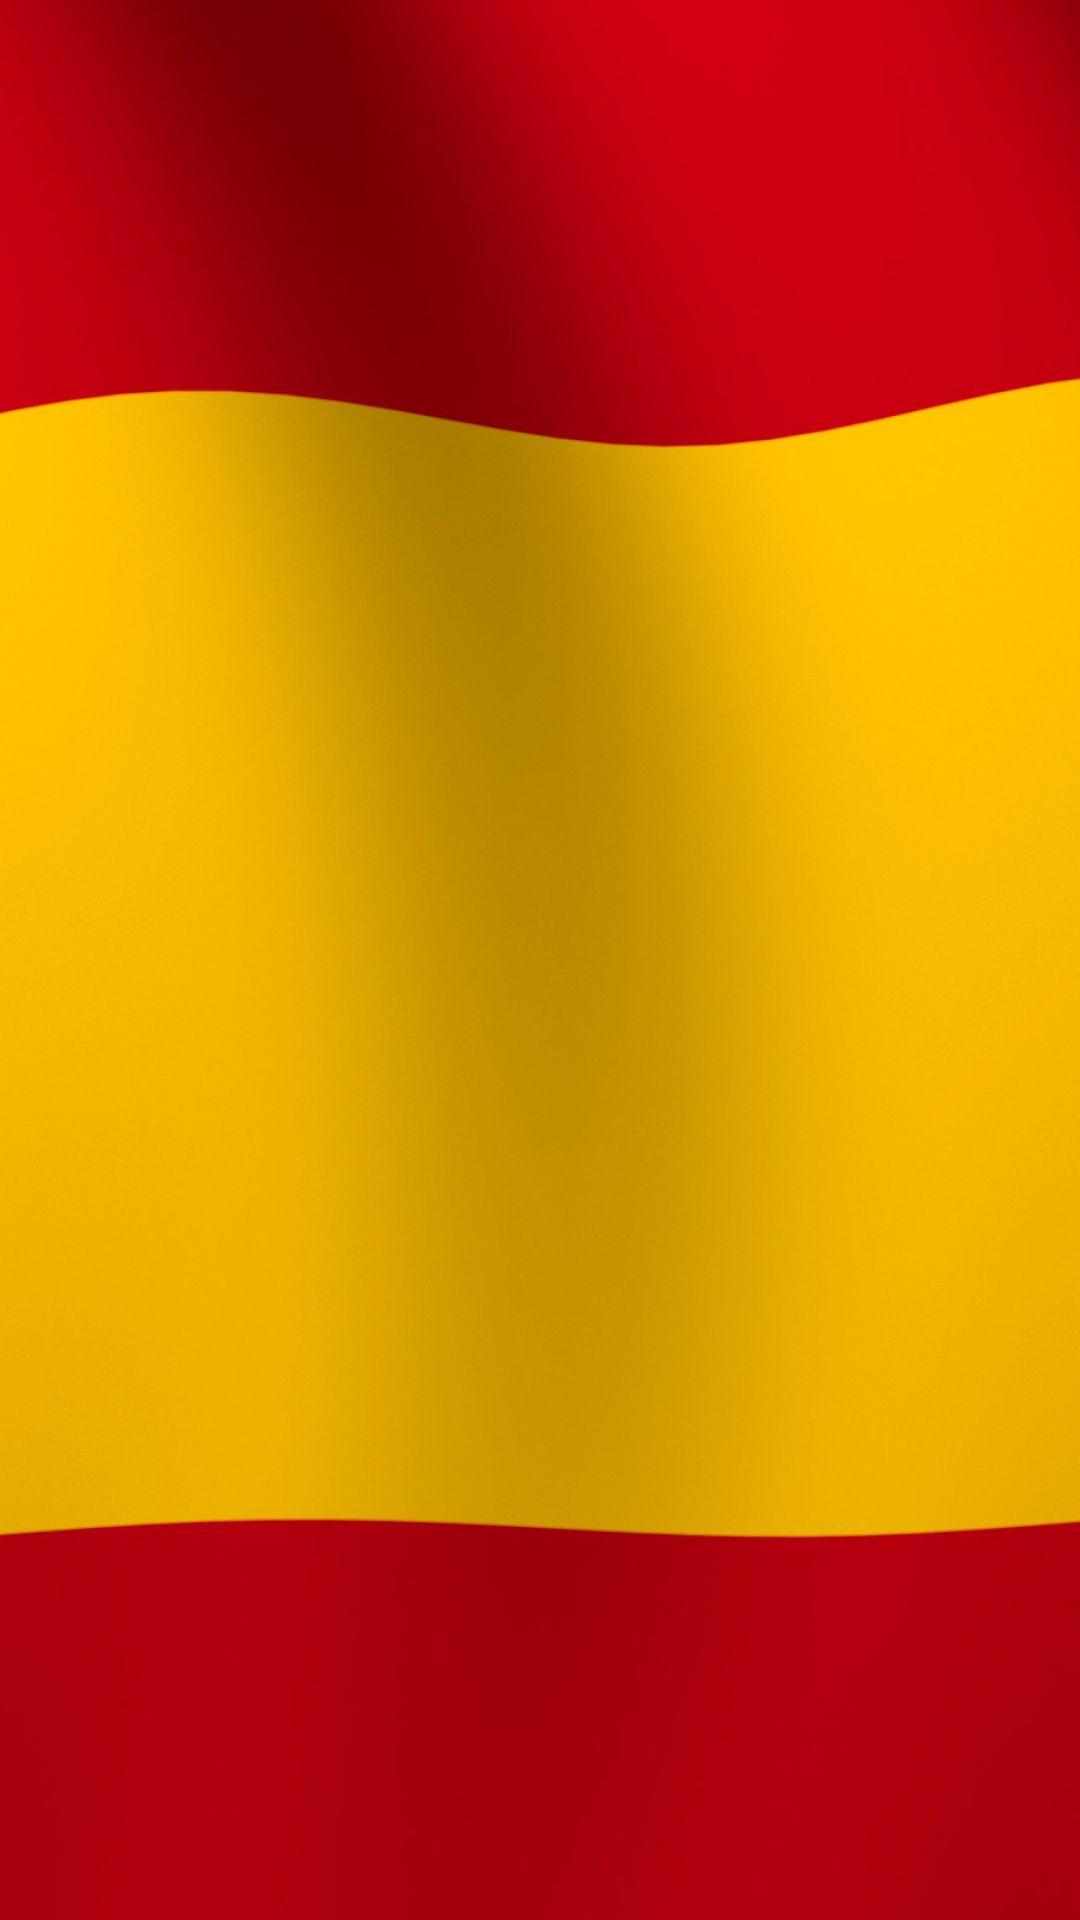 Spain flag 1080x1920 iphone wallpaper